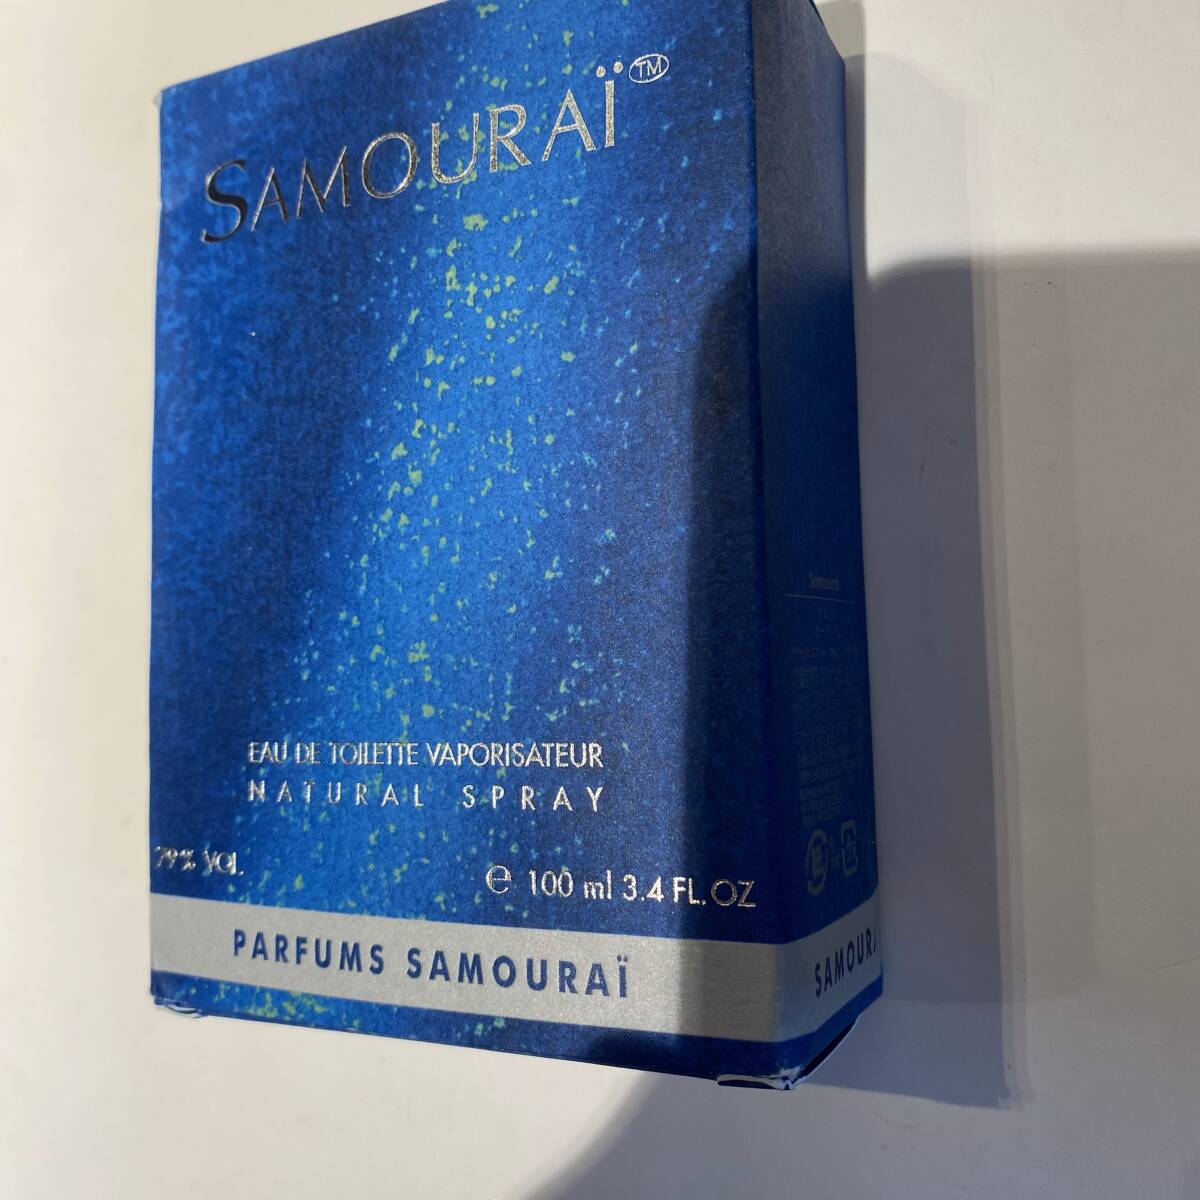 SAMOURAI Samurai perfume 100ml Alain Delon 